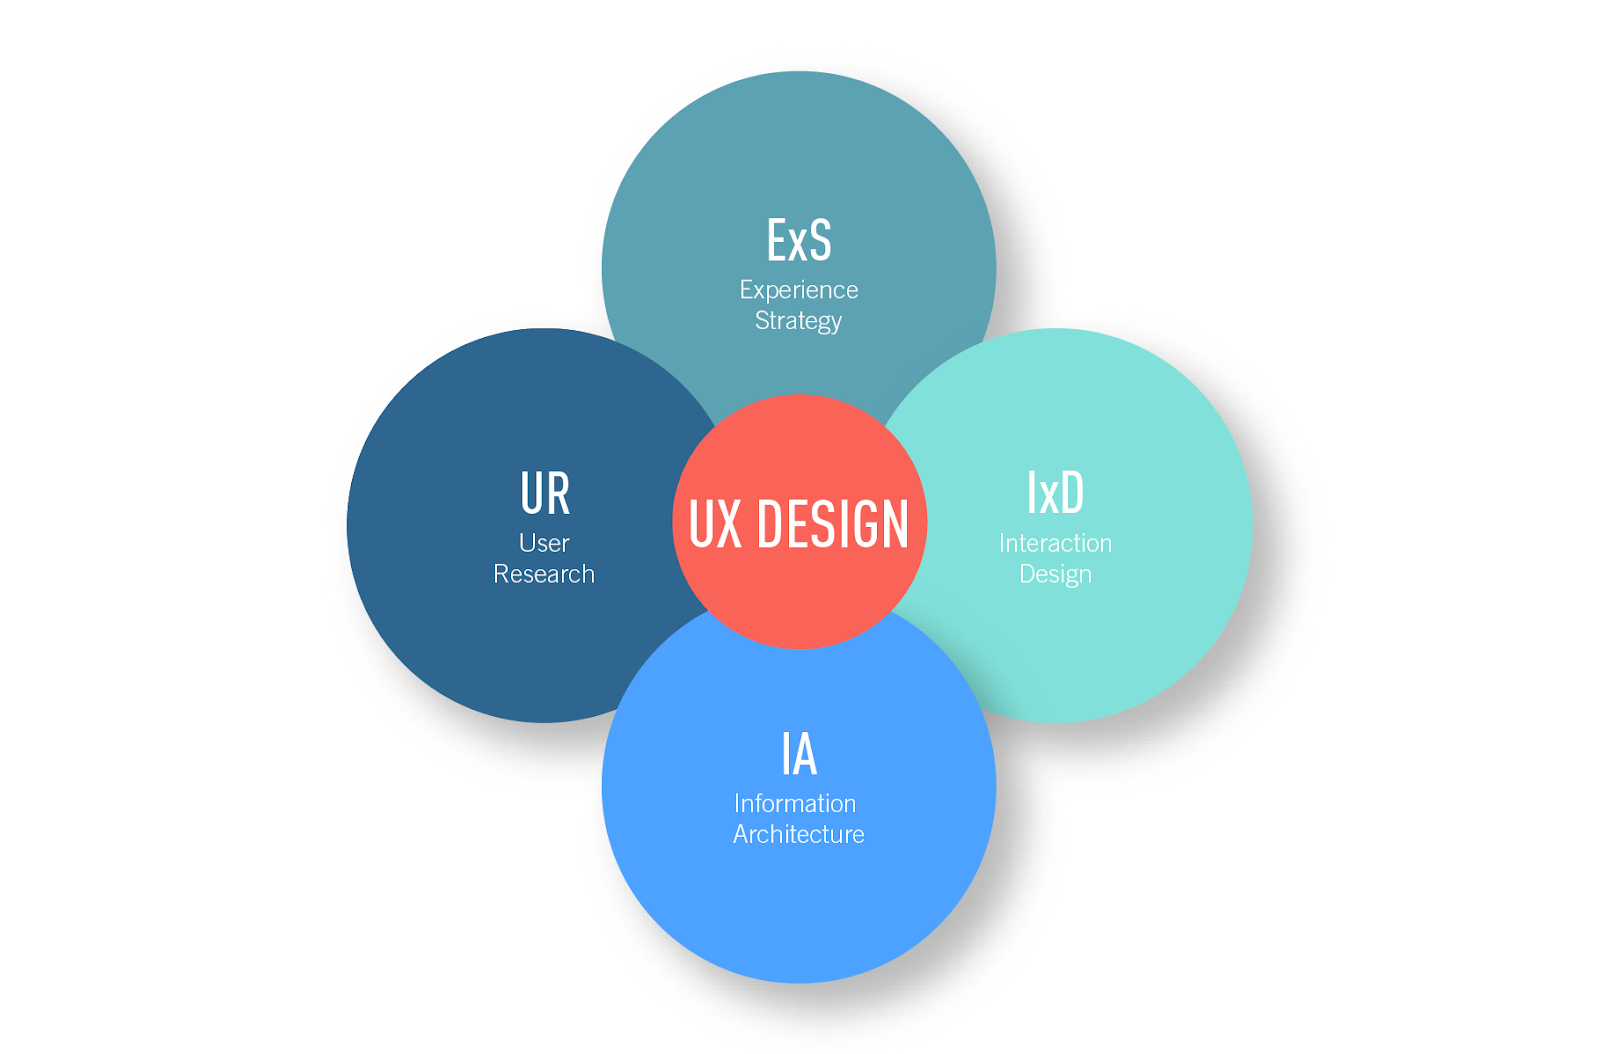 Categories of UX Design